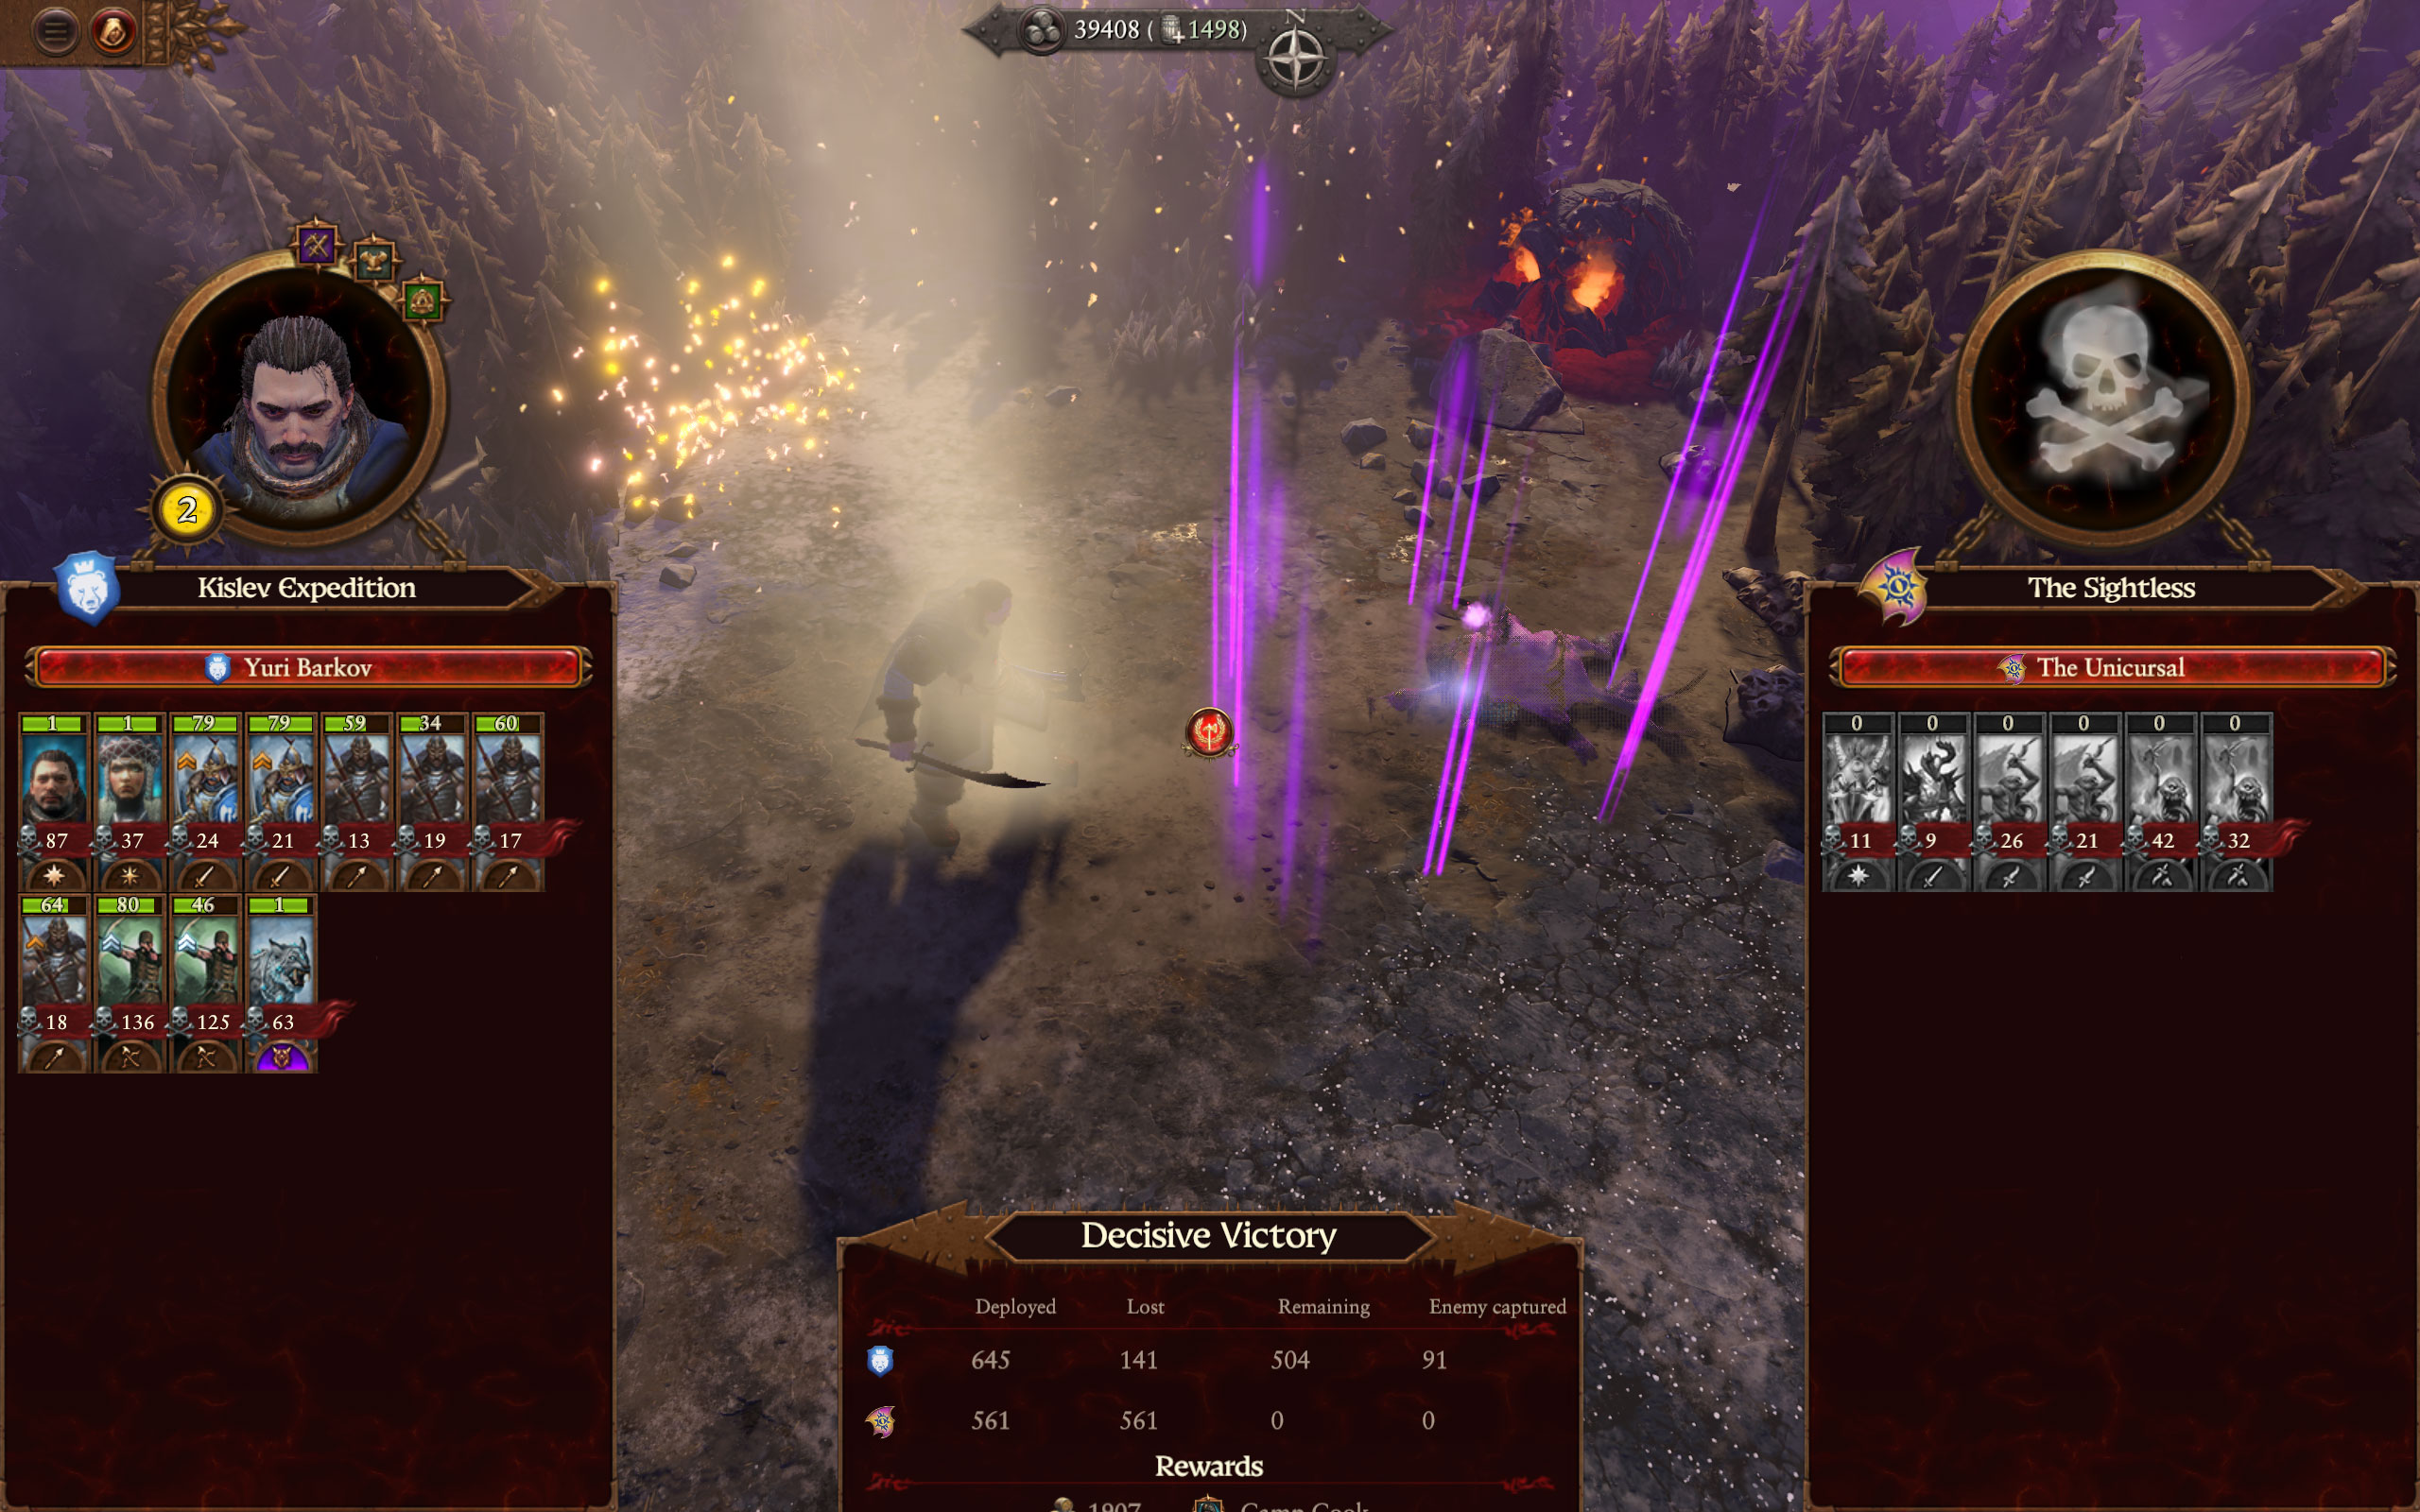 Total War: Warhammer III GPU Benchmark: 30+ GPUs Tested!